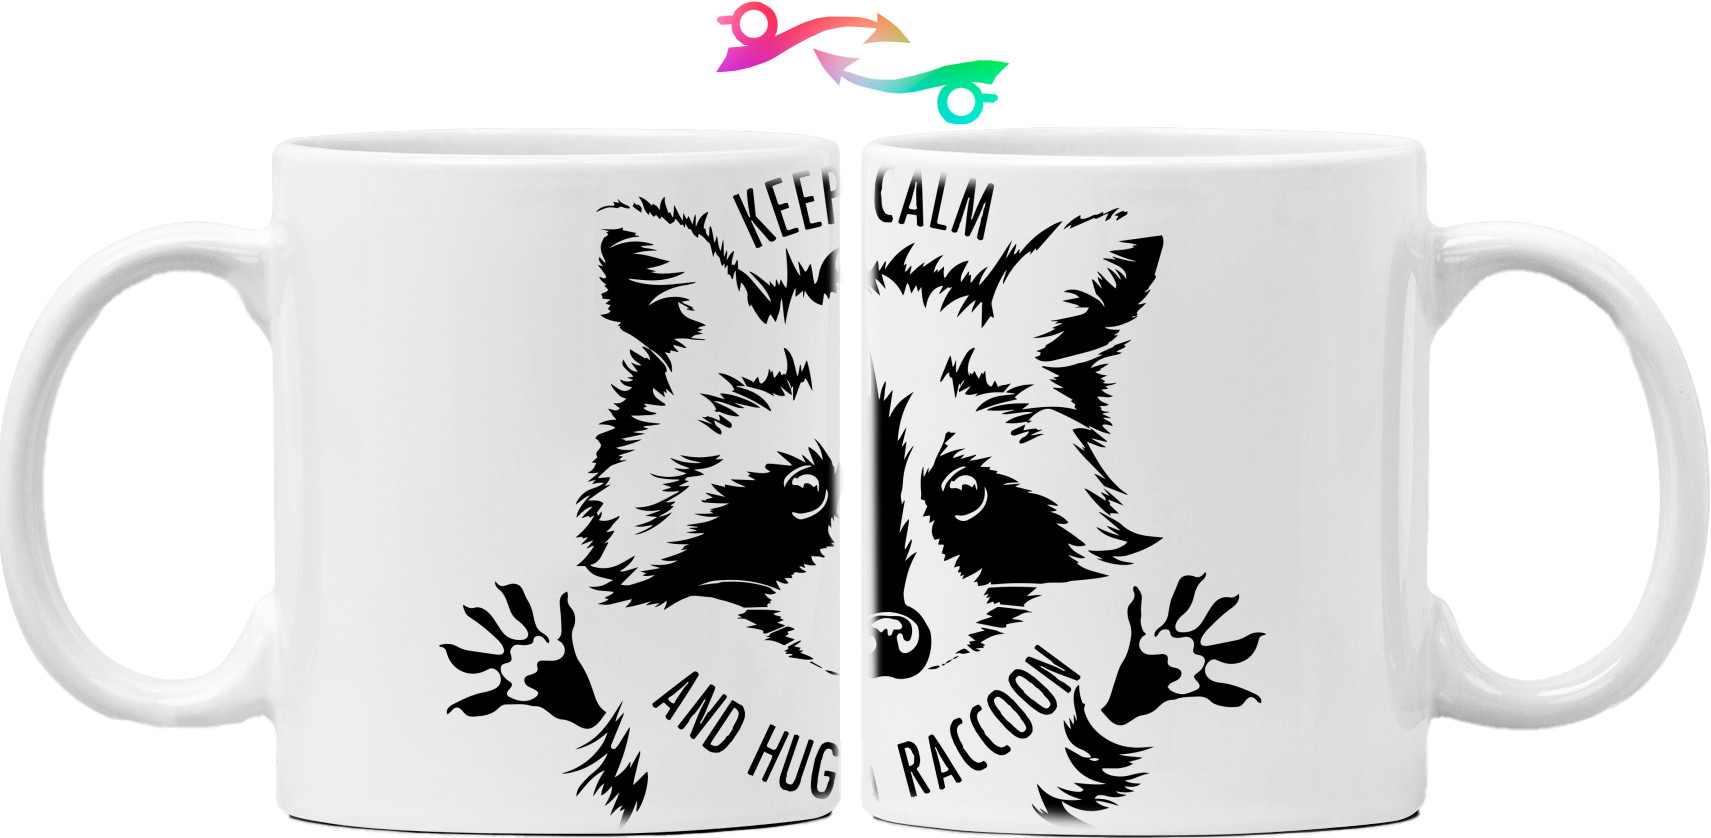 Keep Calm And Hug a Raccoon